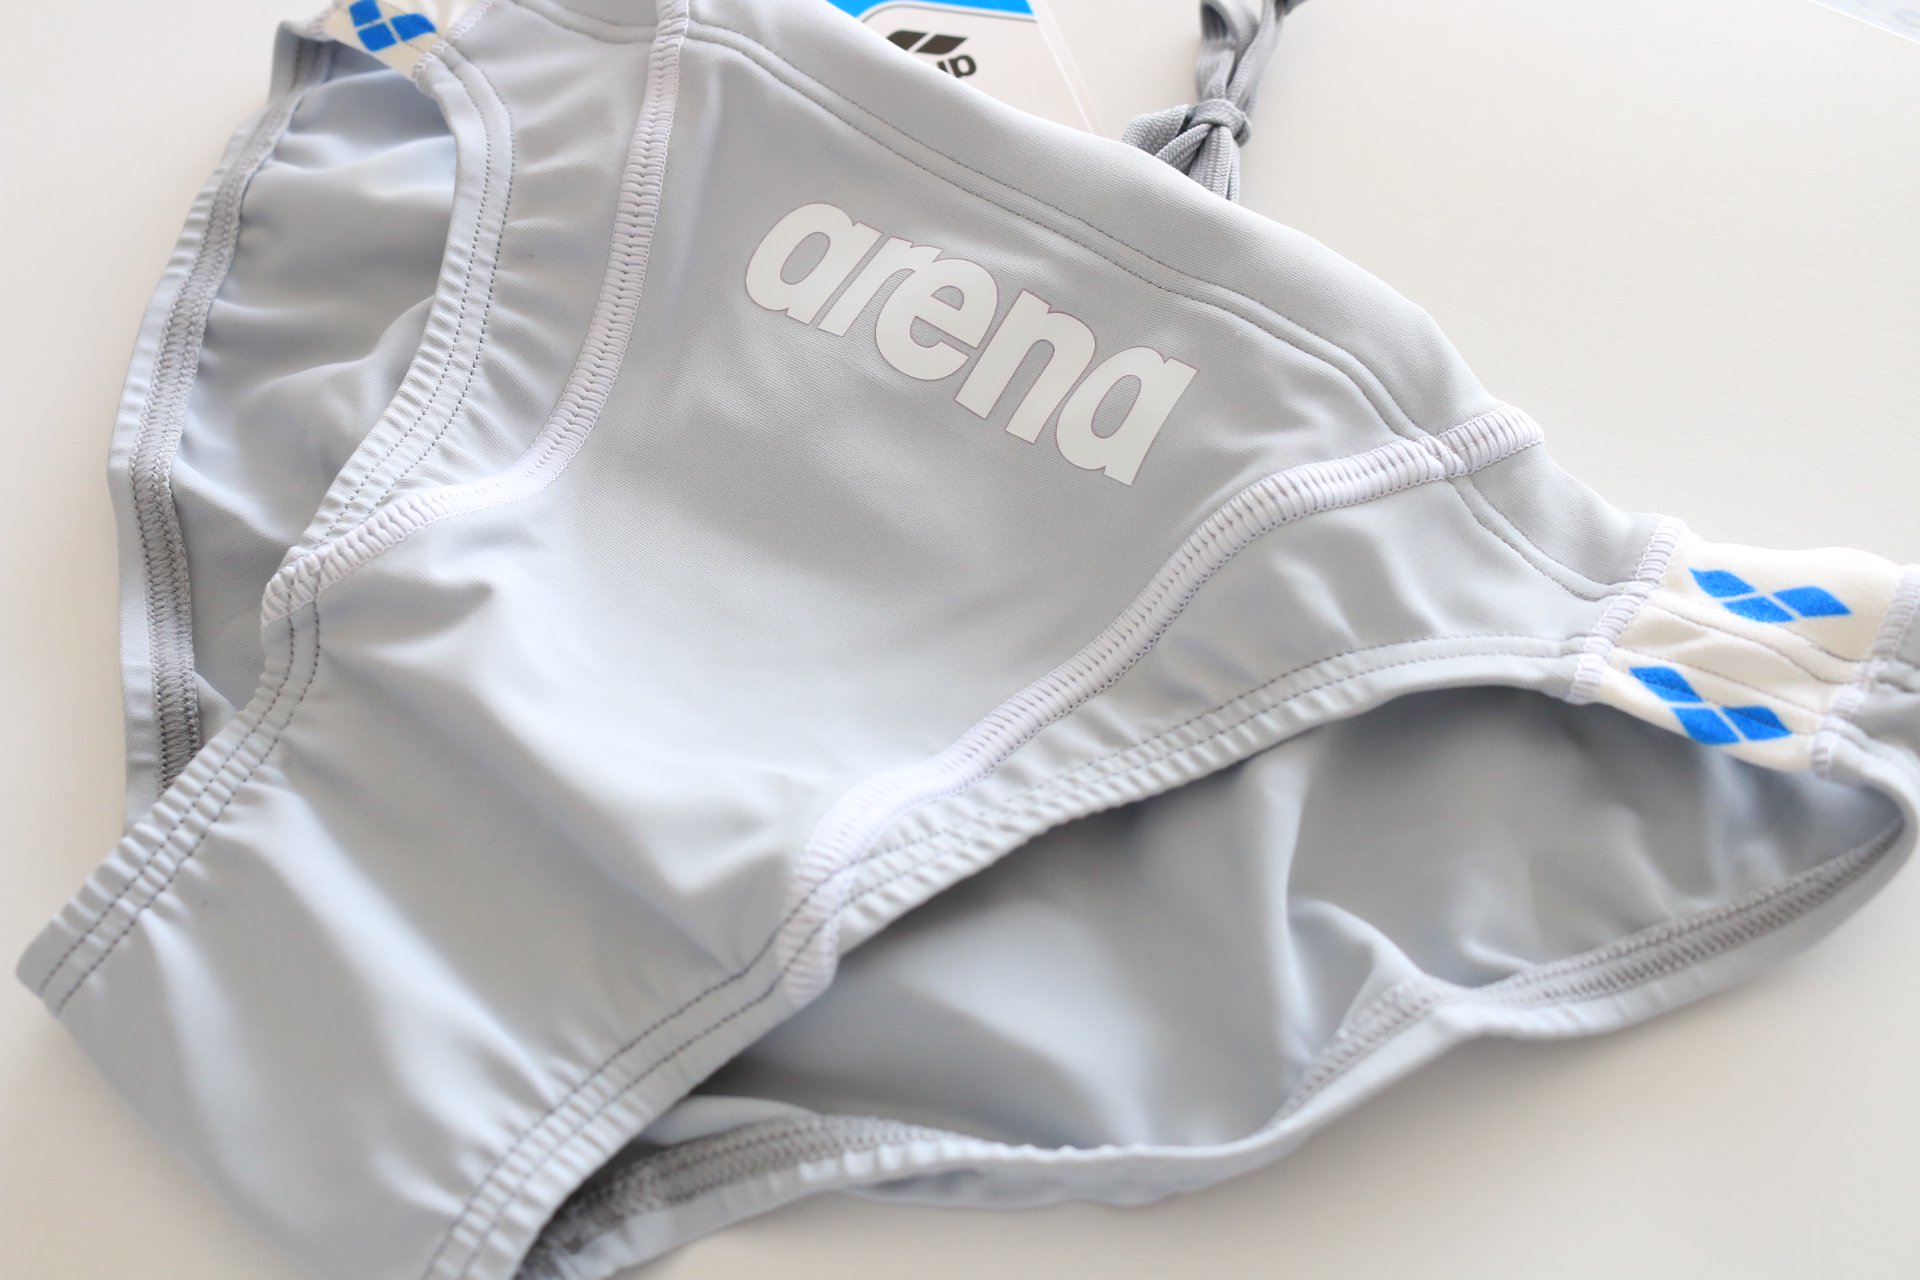 Arena Men's Competition Swimwear Racing Swimsuit nux-D Bikini 